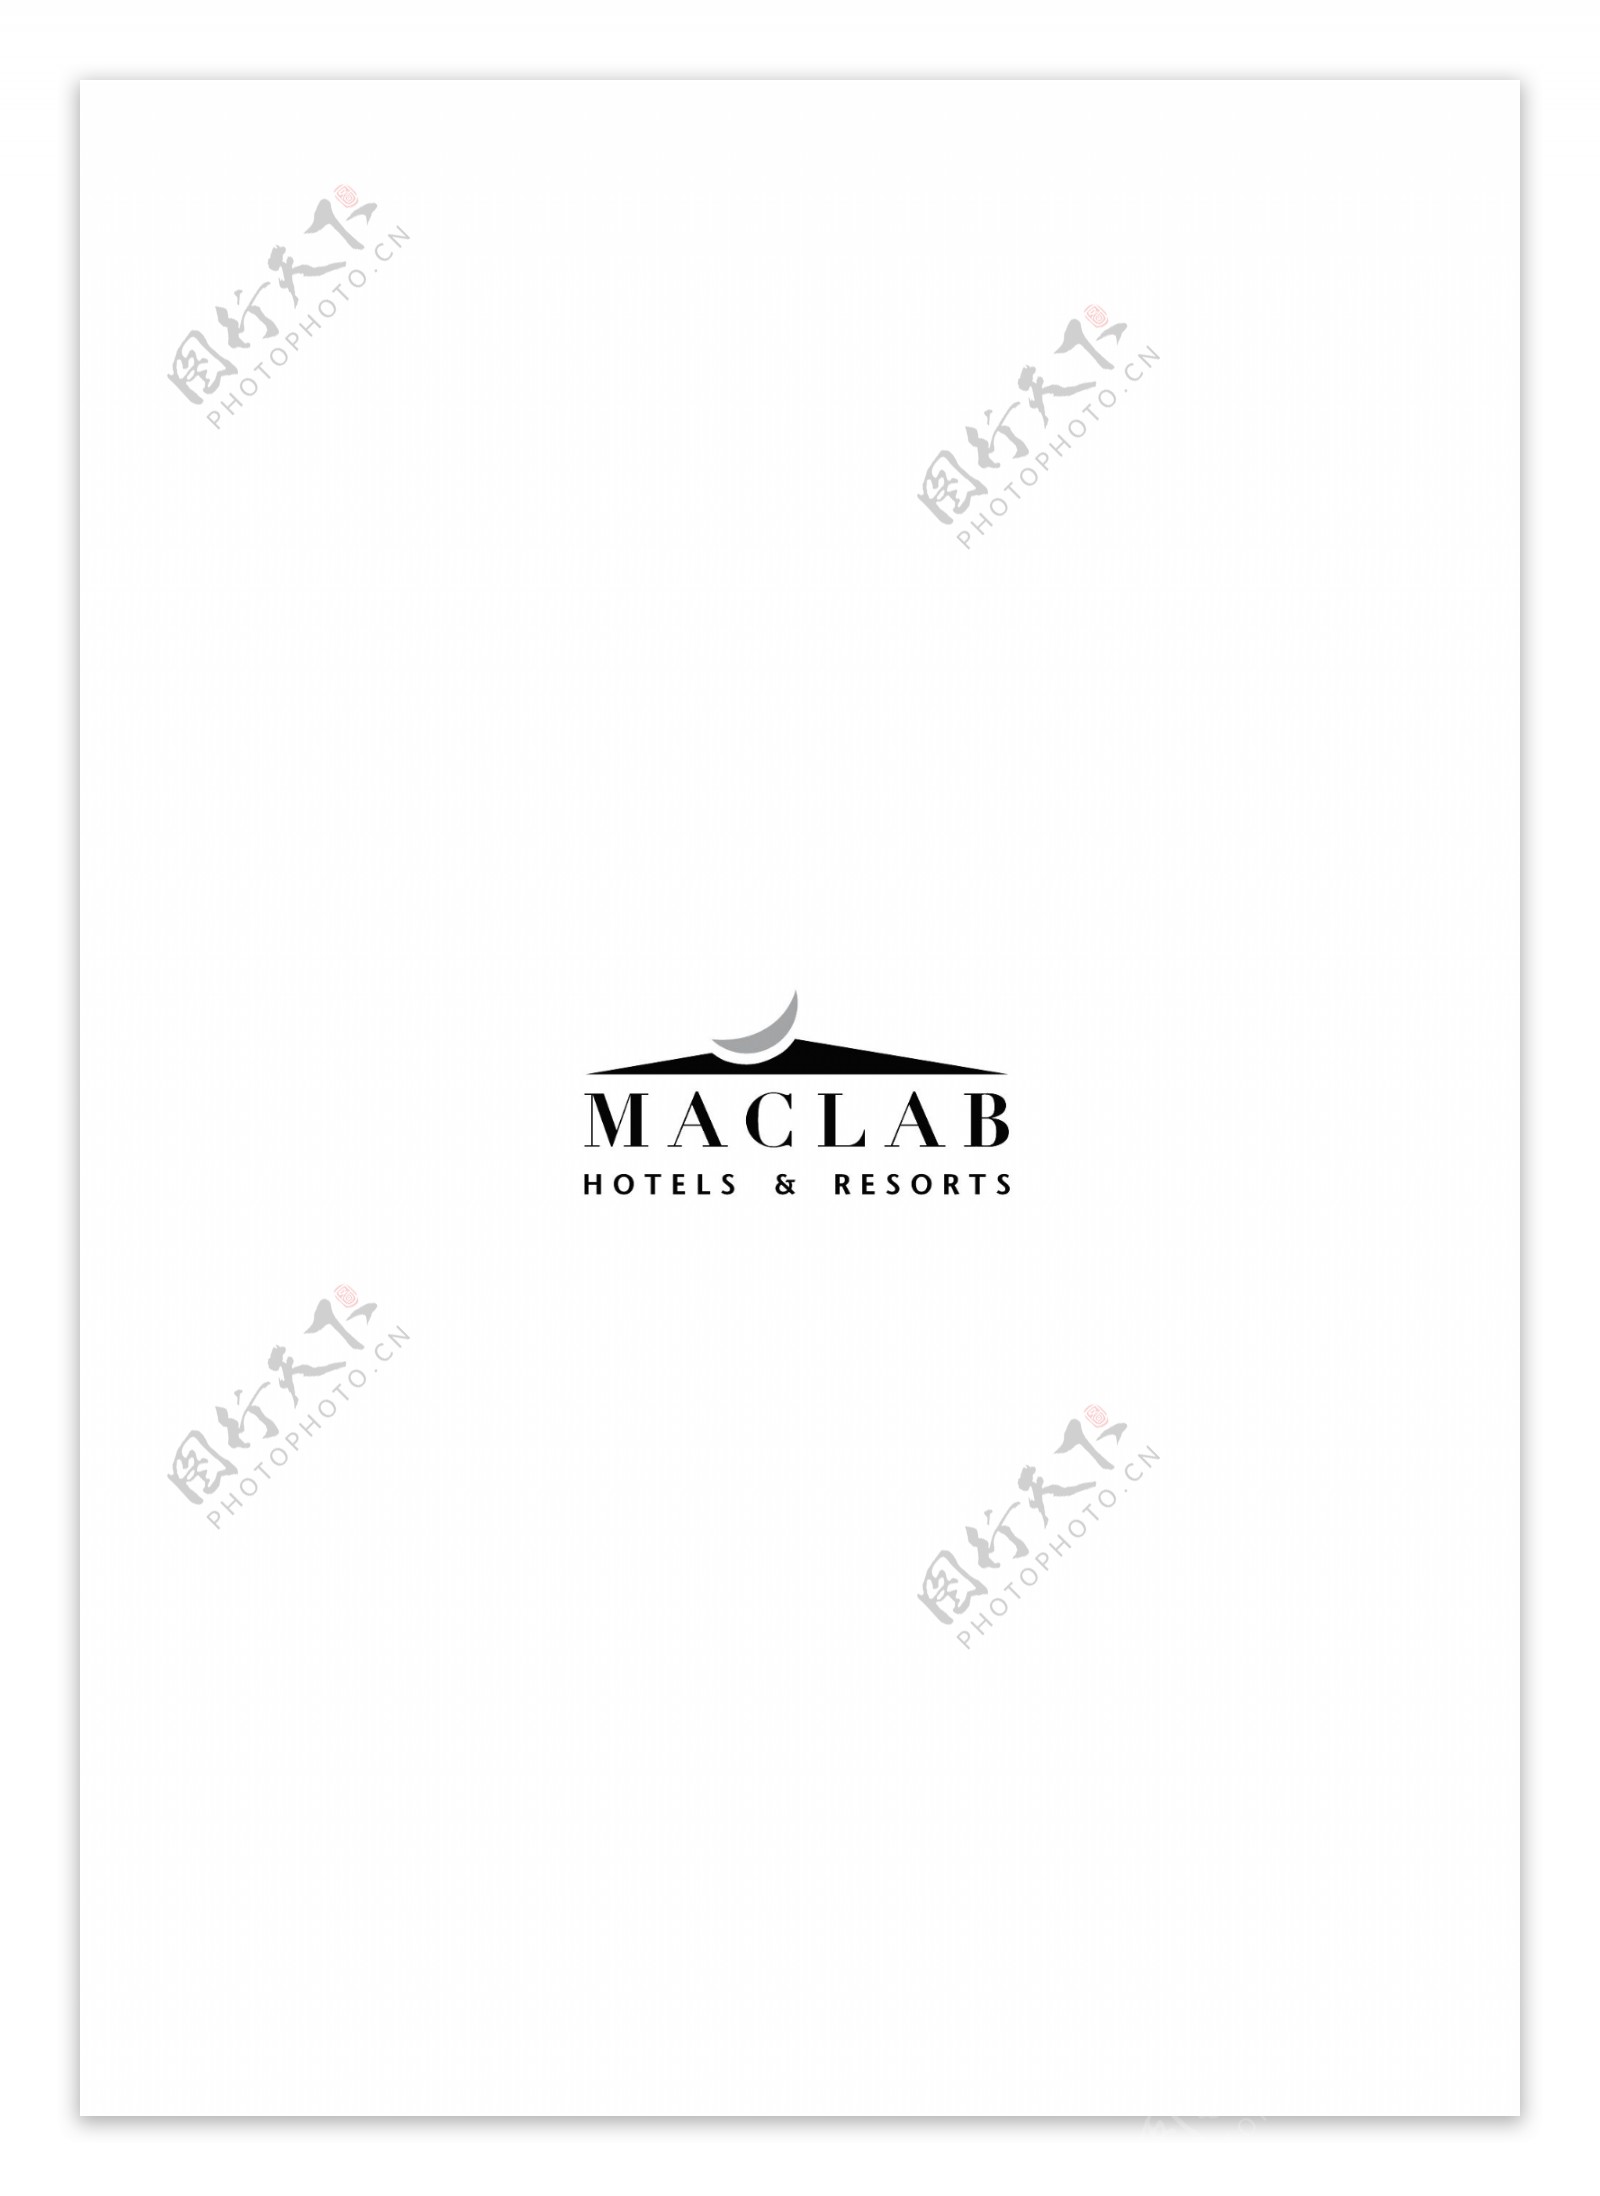 Maclablogo设计欣赏Maclab著名酒店LOGO下载标志设计欣赏